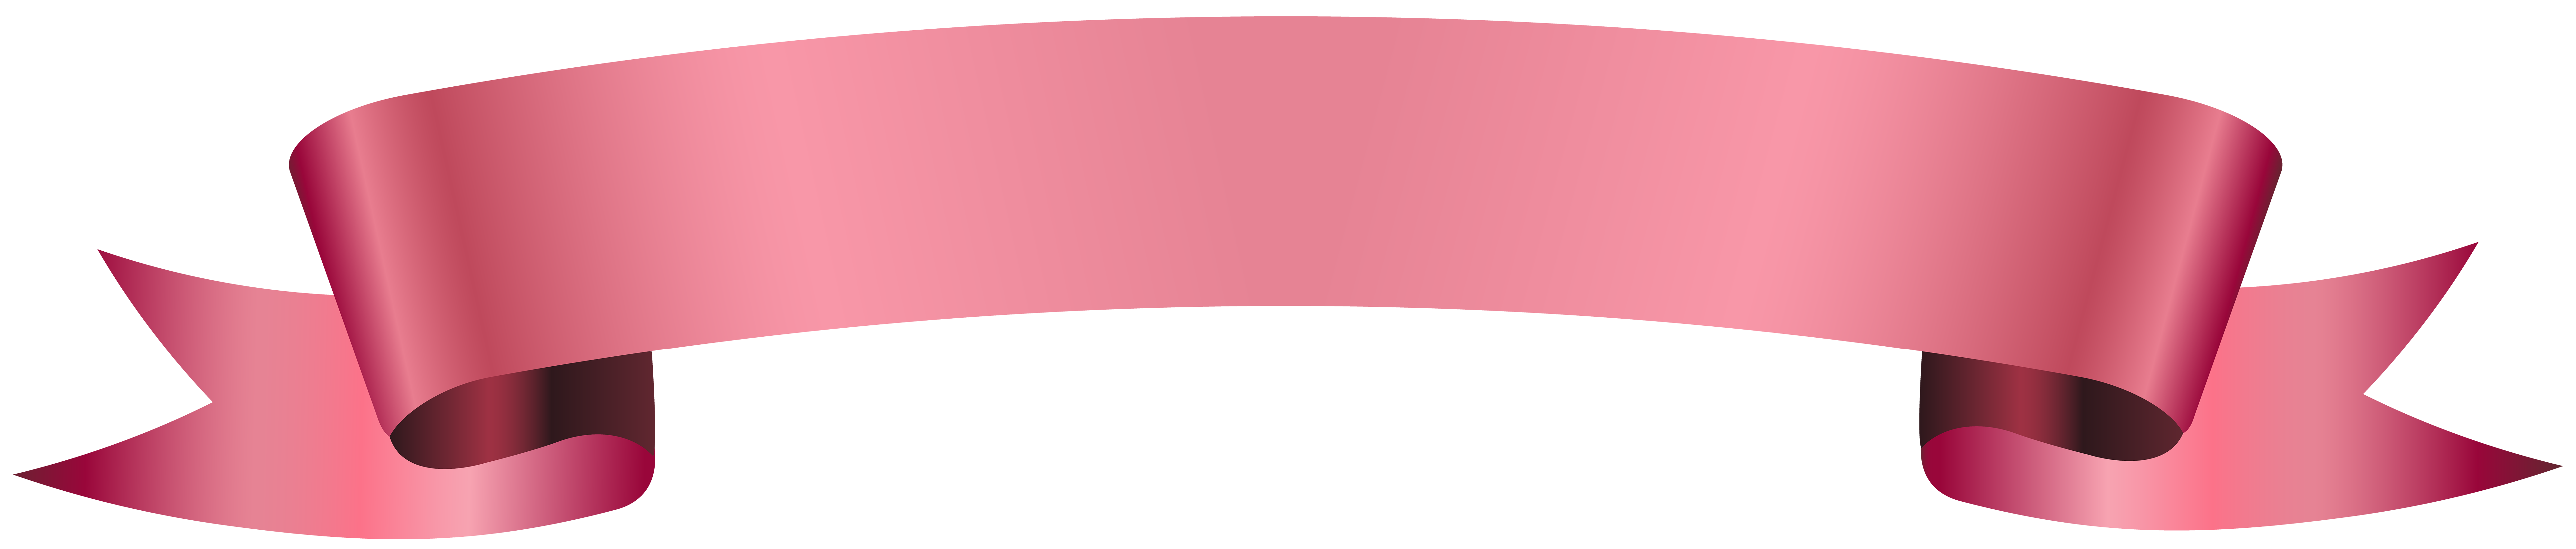 pink clipart banner